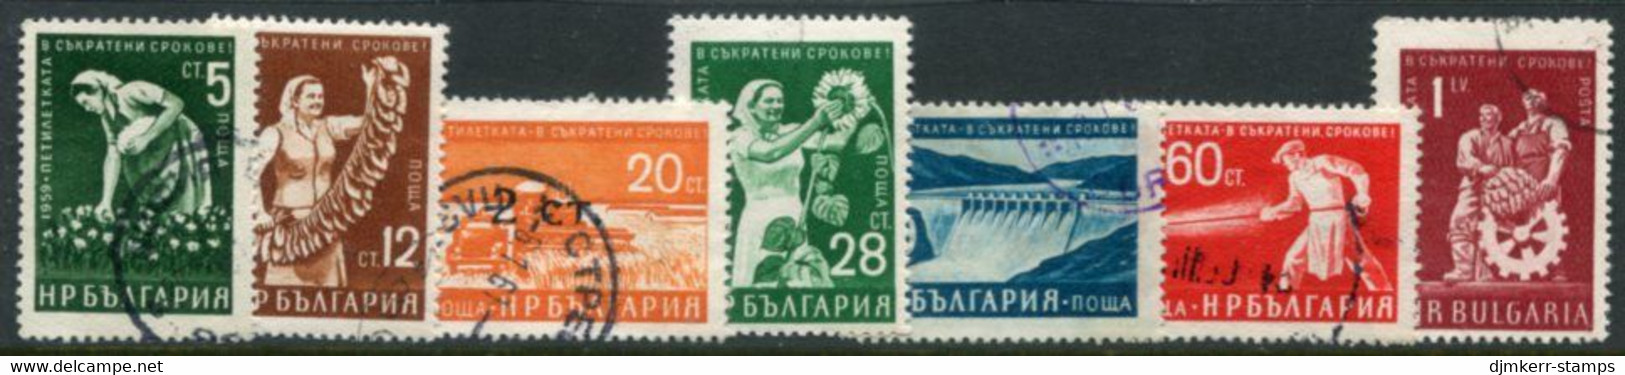 BULGARIA 1959 Five-year Plan II Used.  Michel 1145-51 - Used Stamps